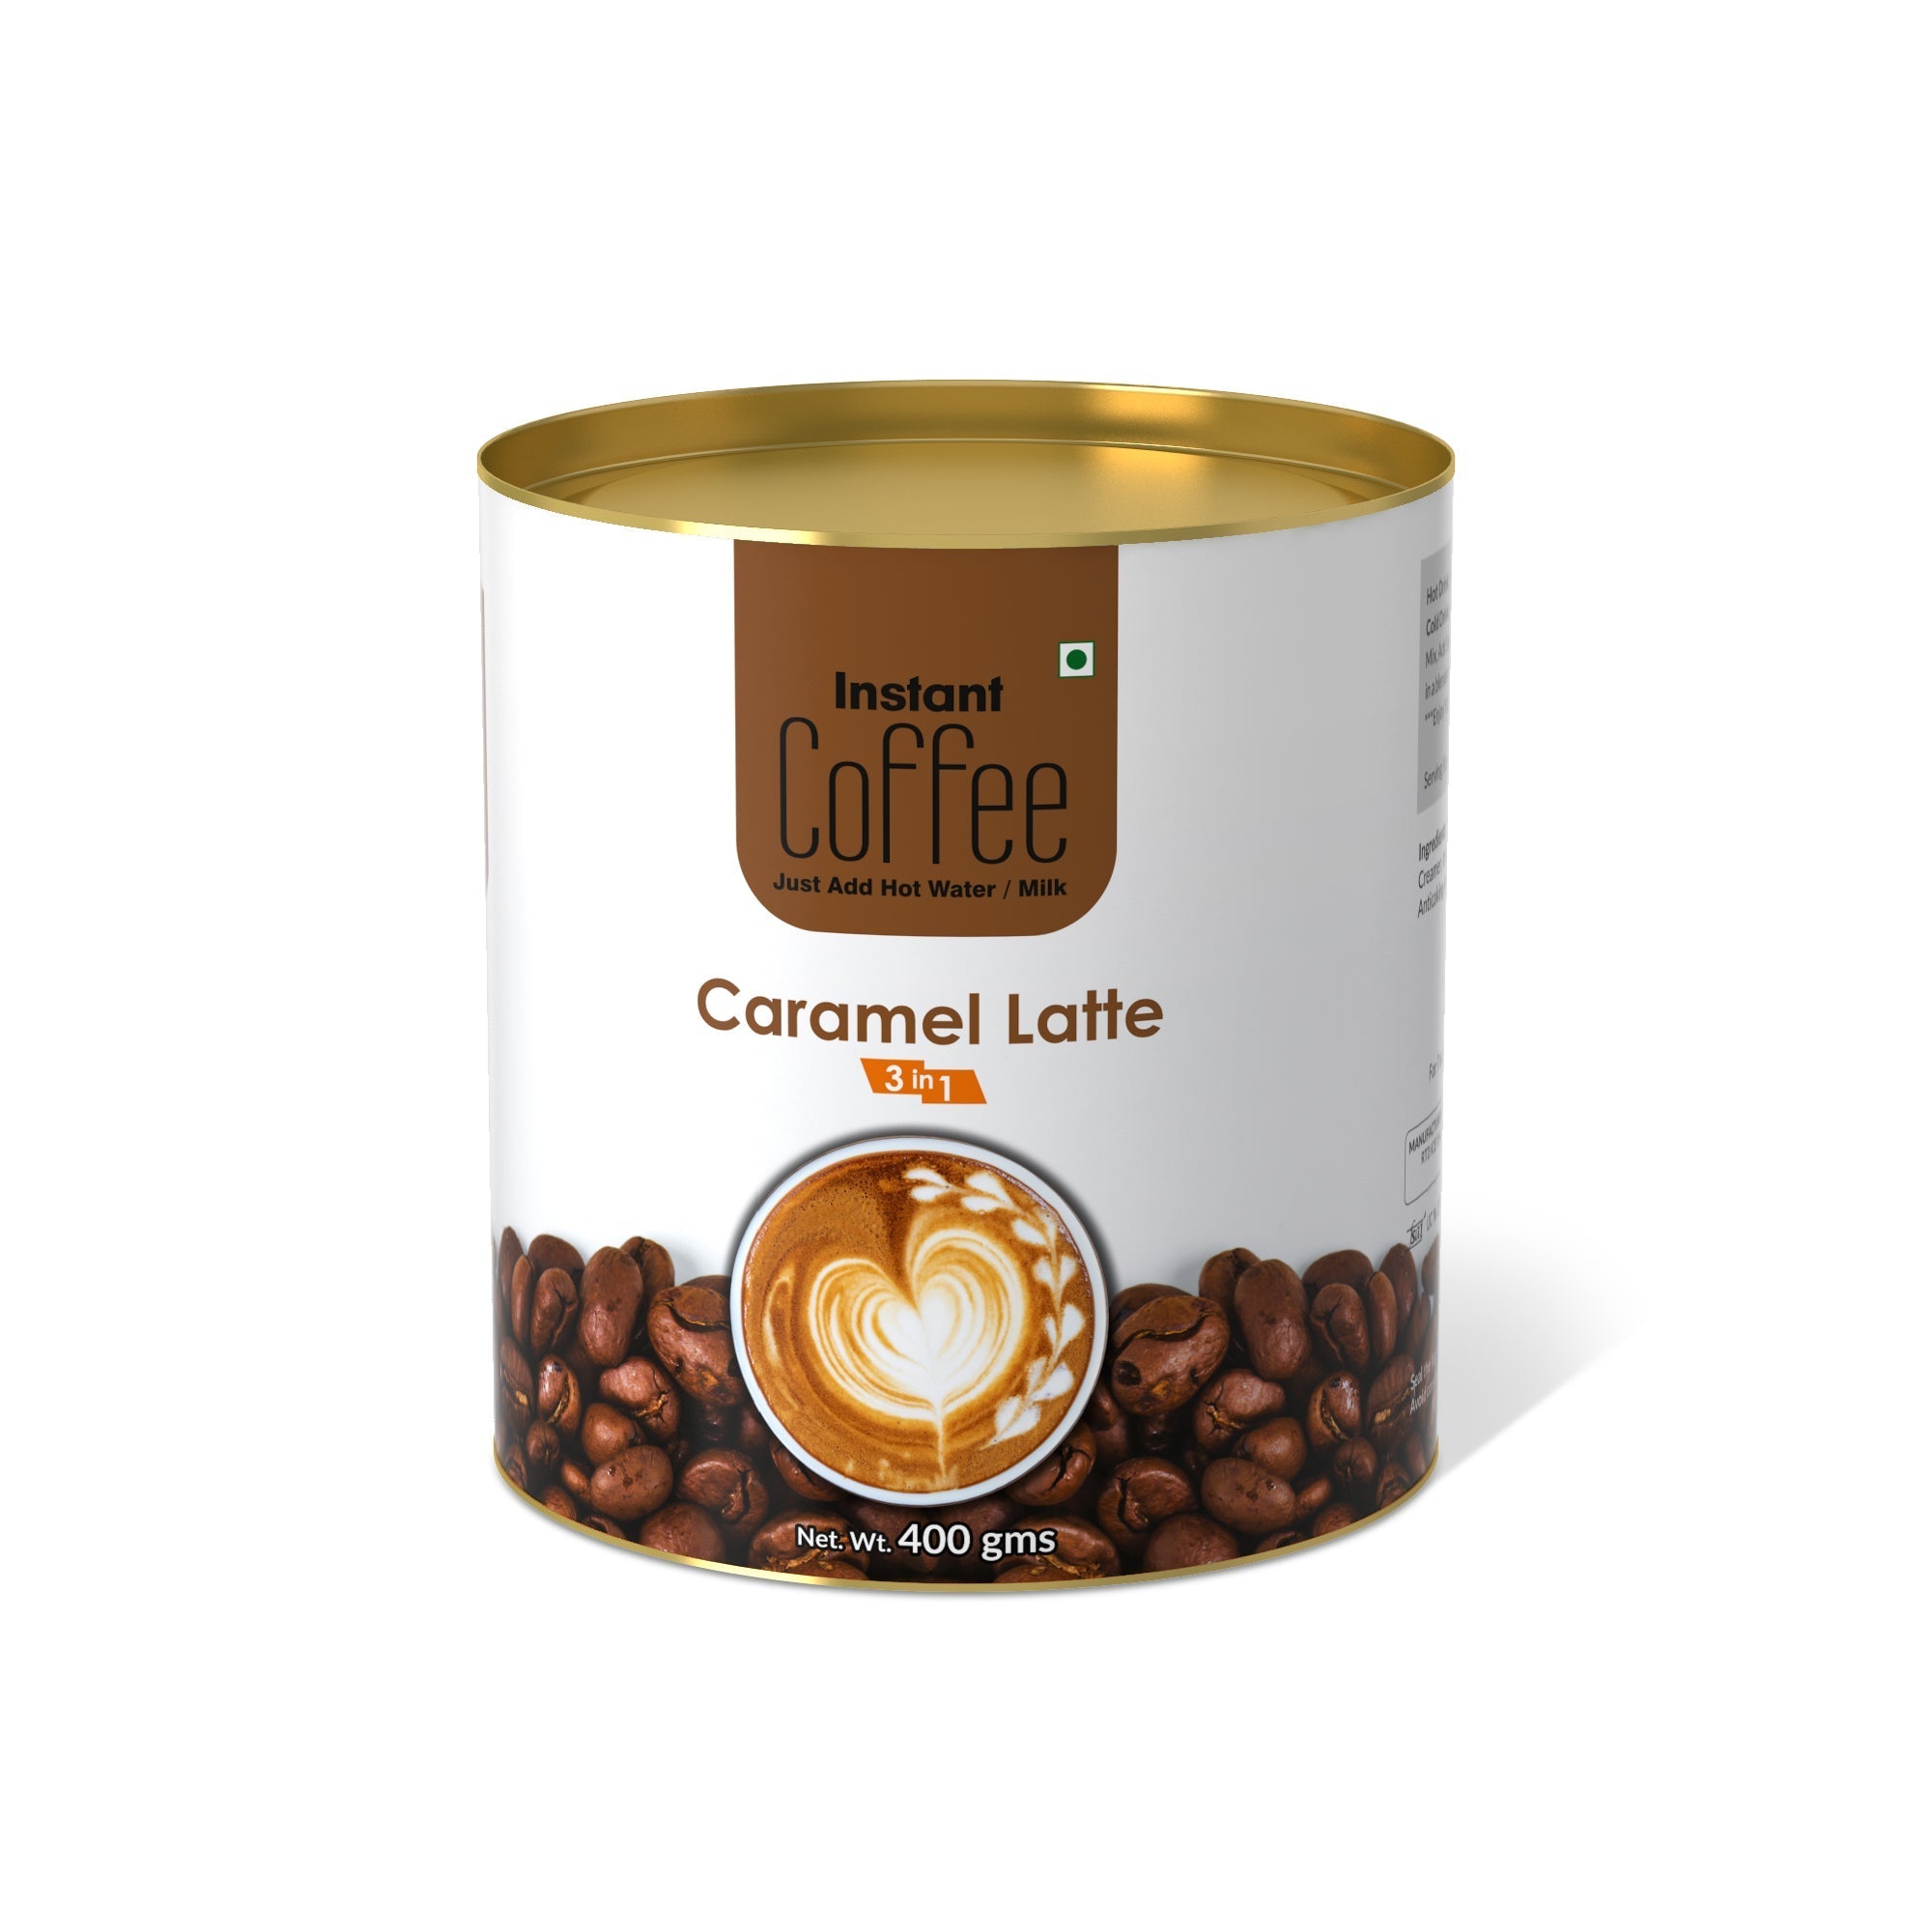 Caramel Latte Instant Coffee Premix (3 in 1) - 400 gms